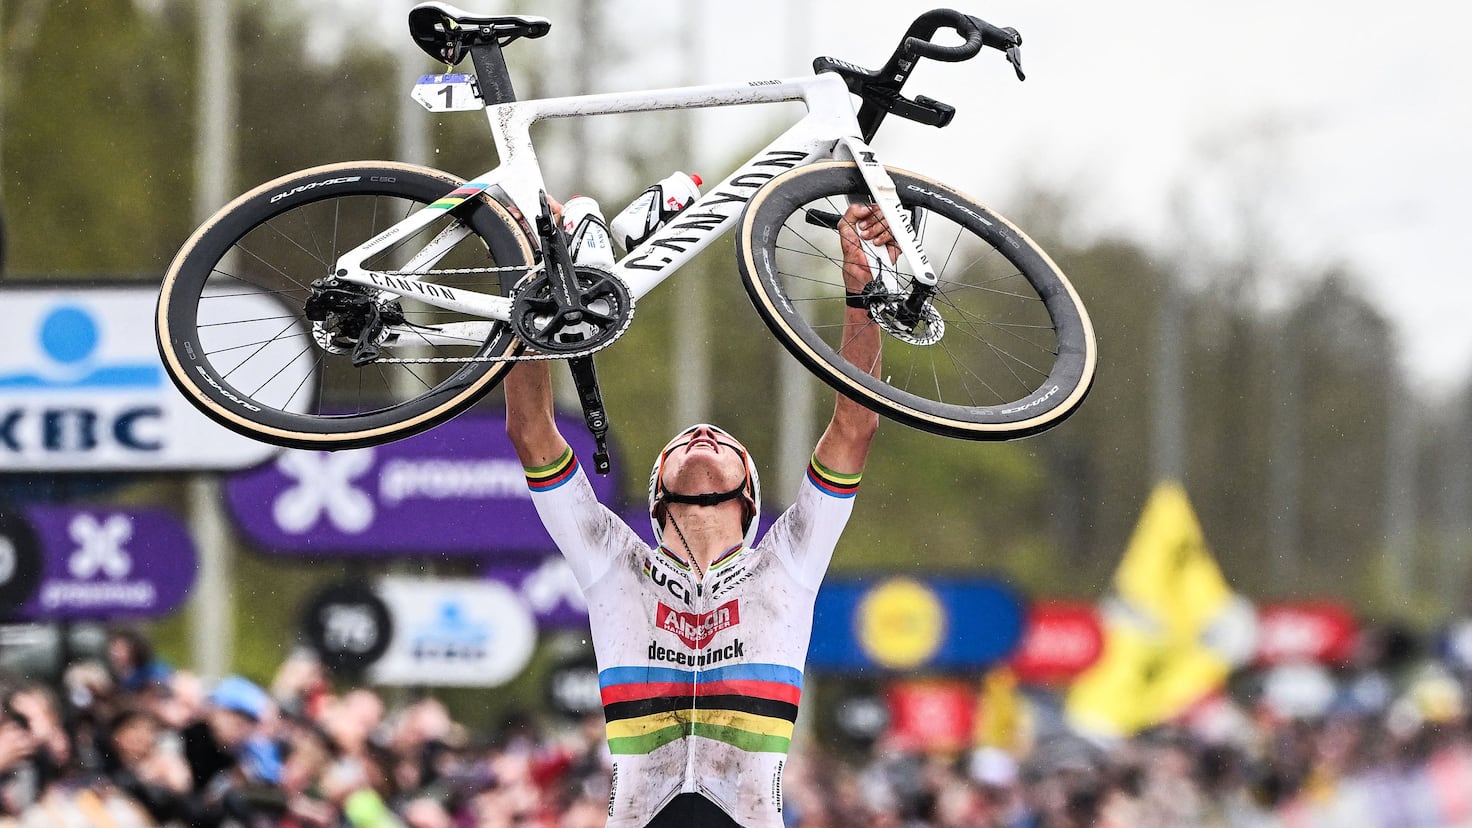 Van der Poel wins his third Tour of Flanders in the misfortune of Cortina

